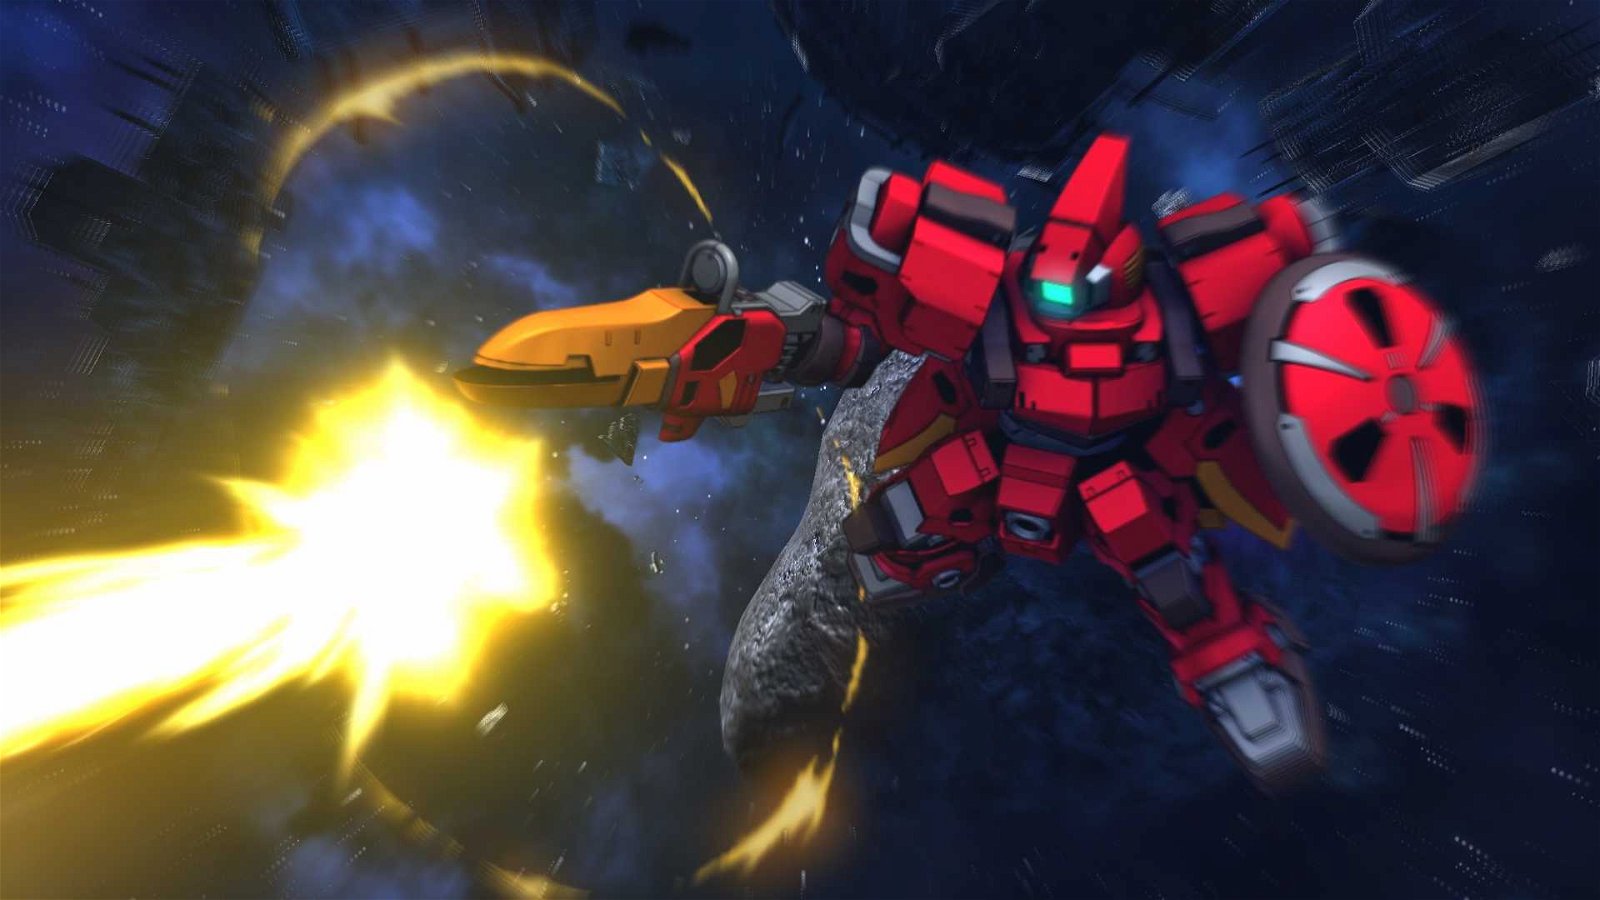 SD Gundam G Generation Cross Rays: Tante nuove immagini